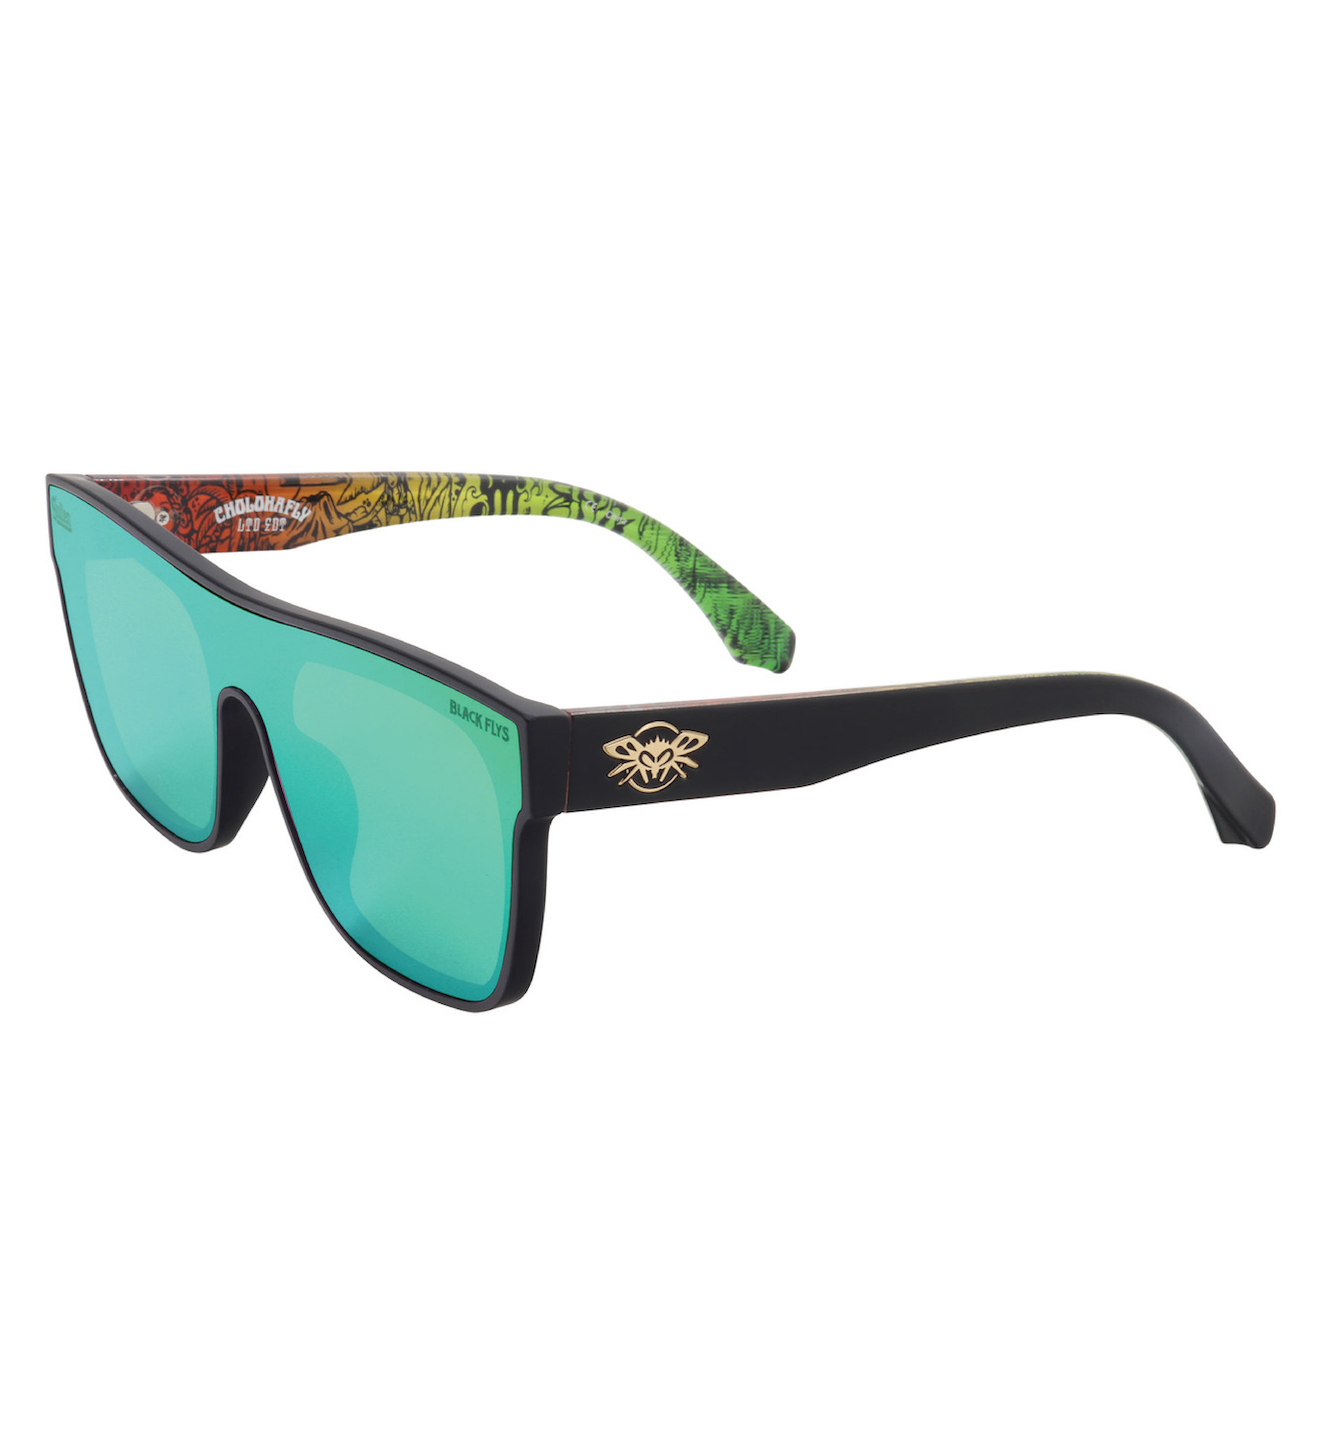 Cholohaflys Sunglasses - Matte Black/Green - 